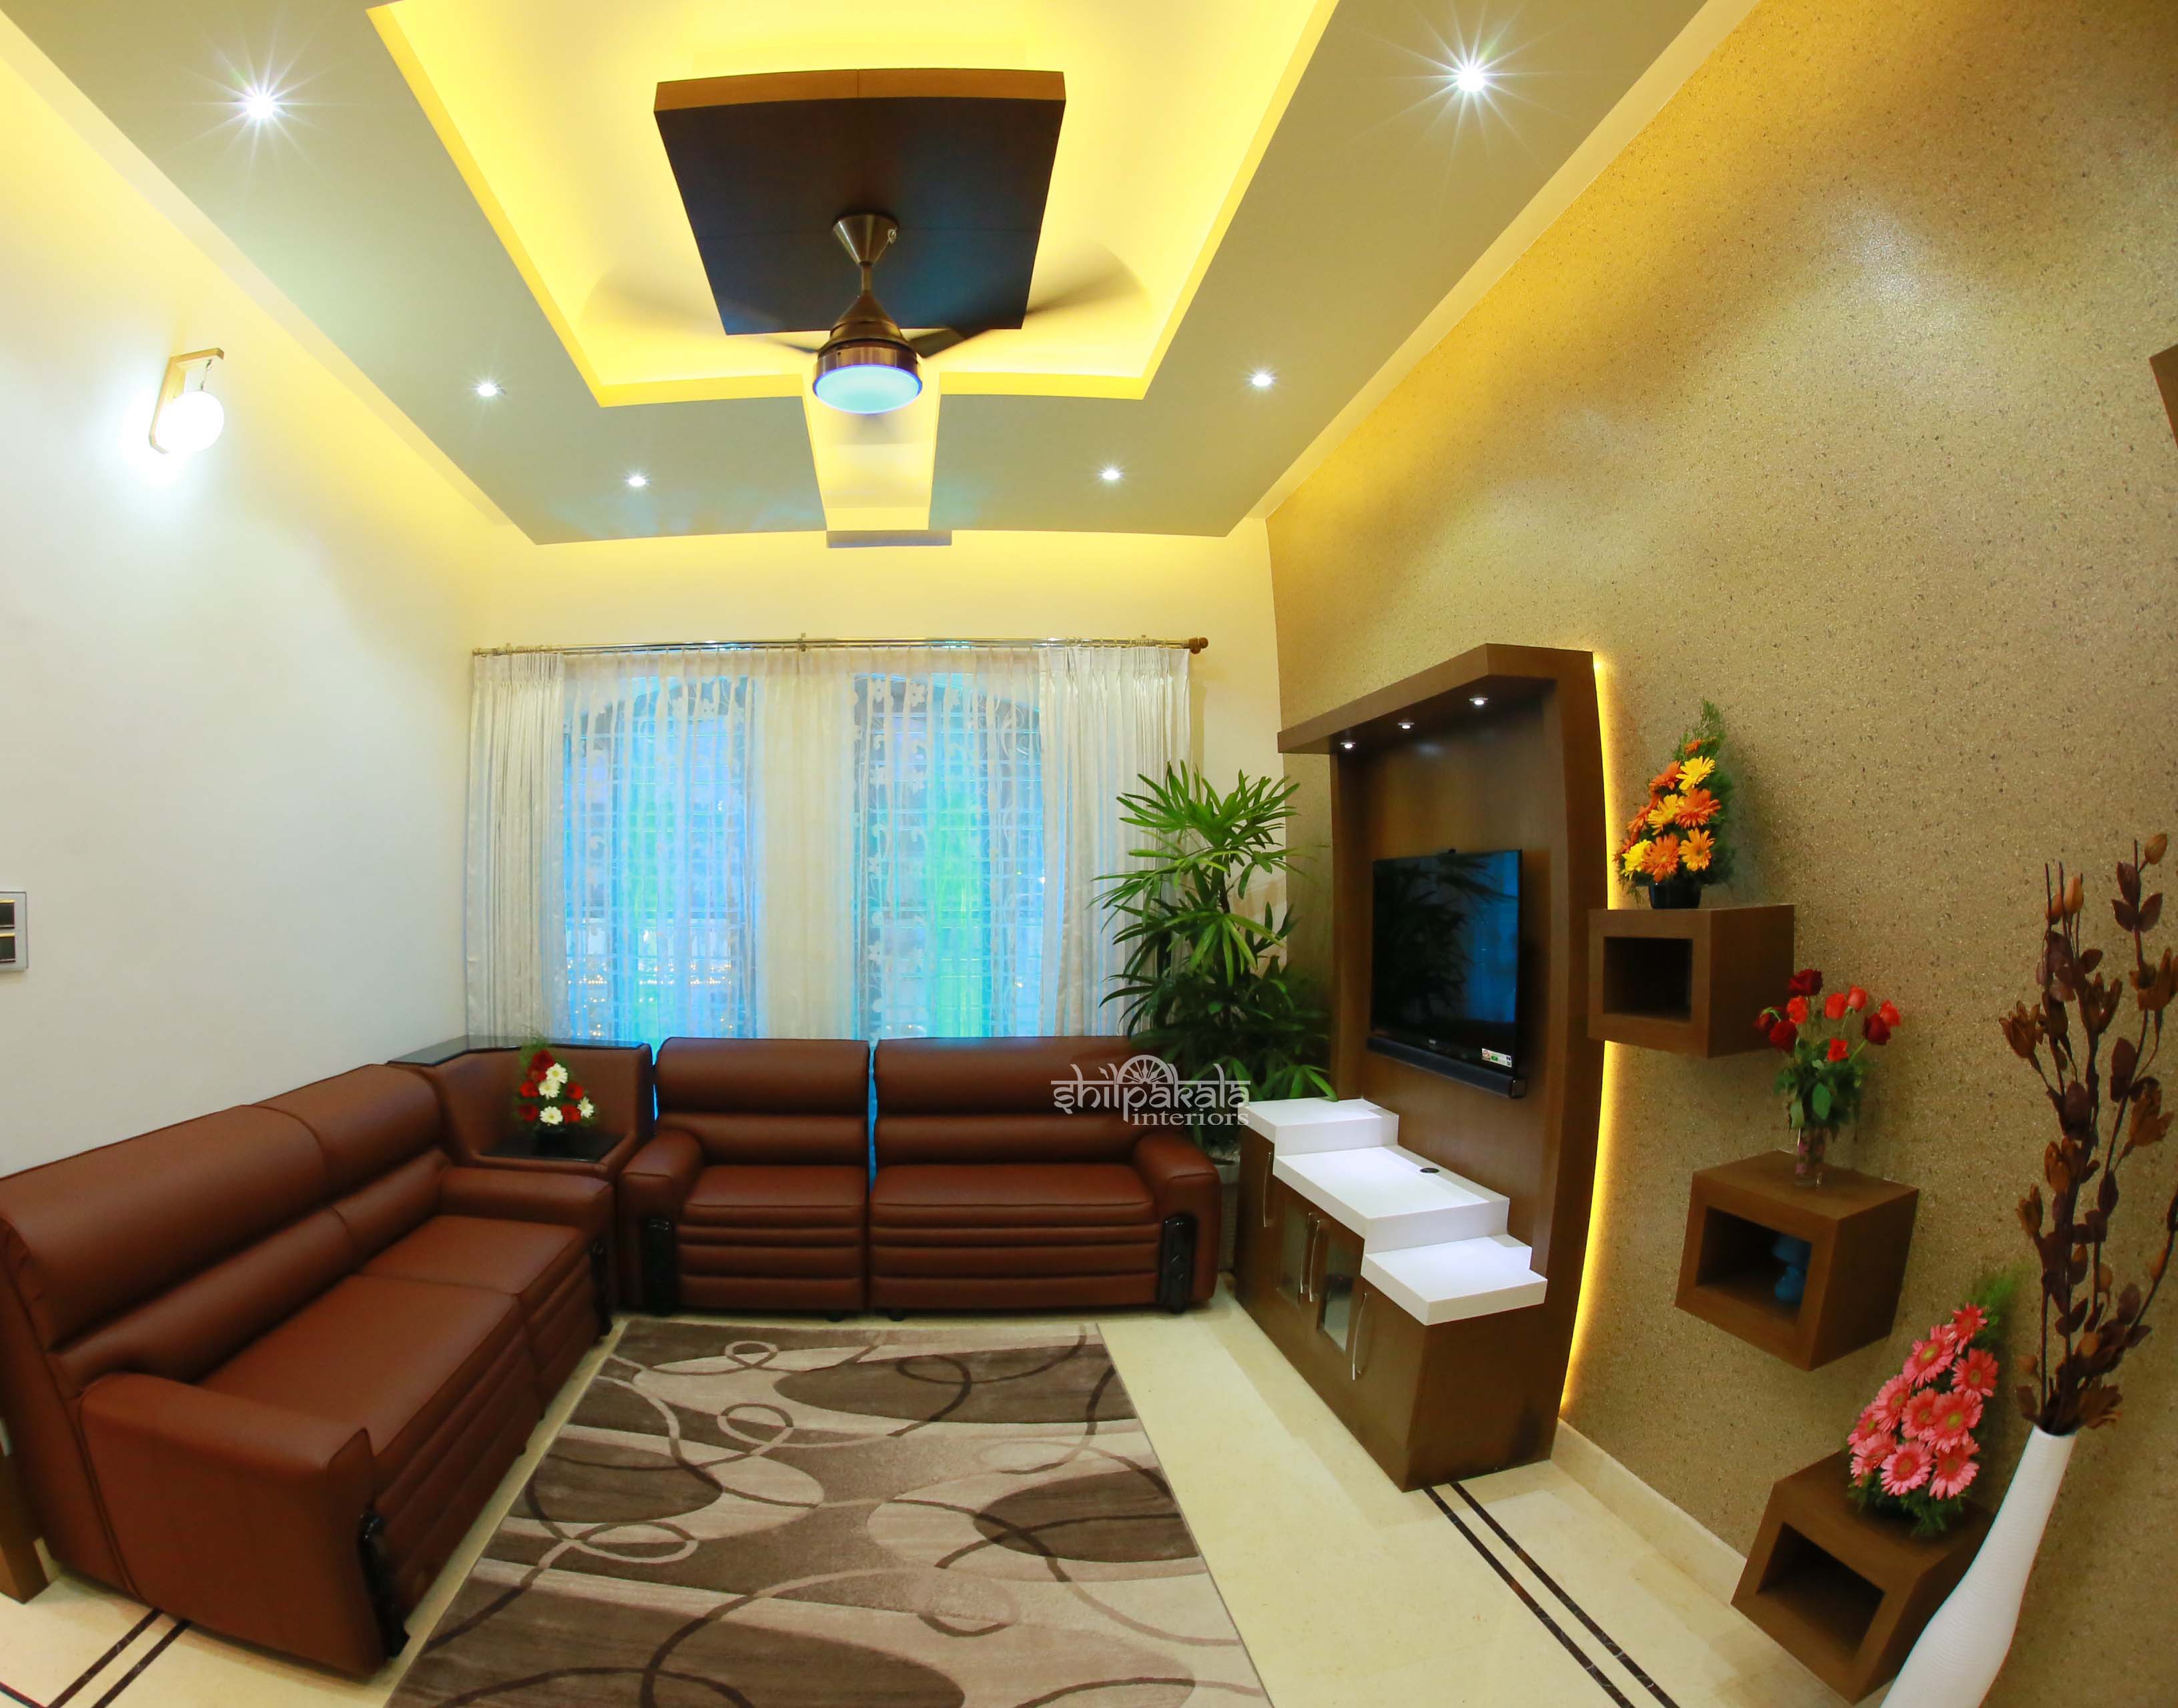 living room design in kerala